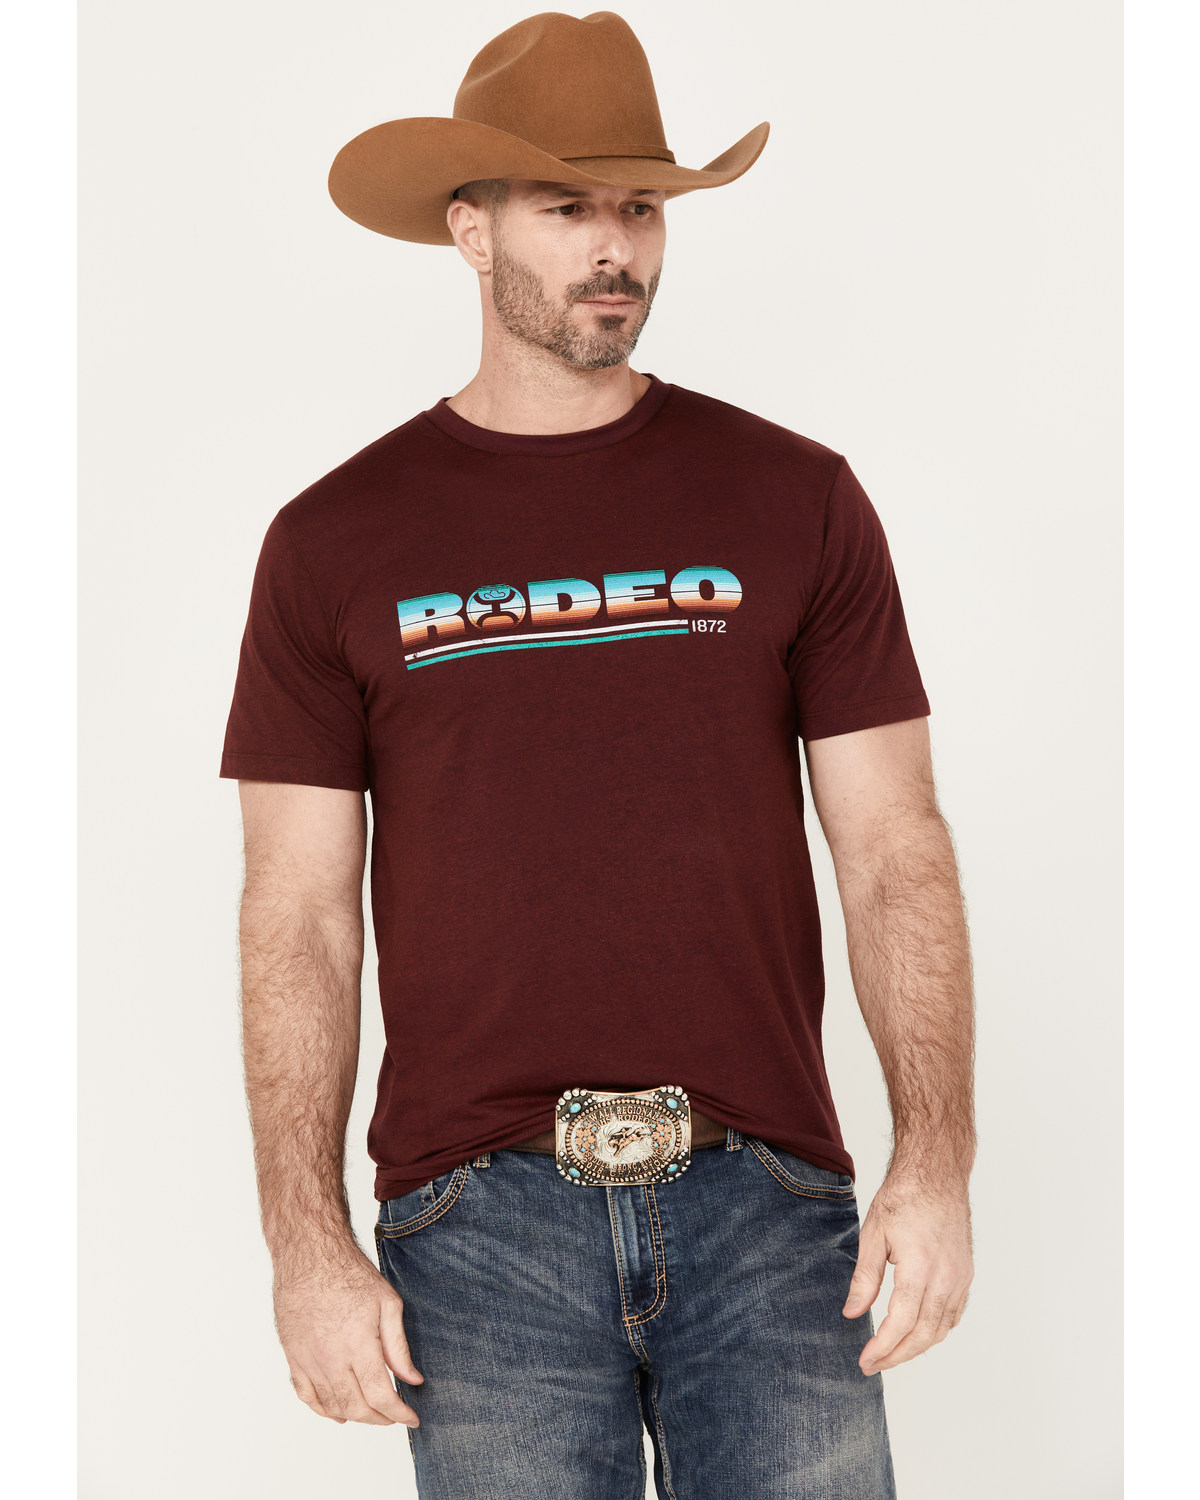 Hooey Men's Serape Rodeo Logo Graphic Short Sleeve T-Shirt